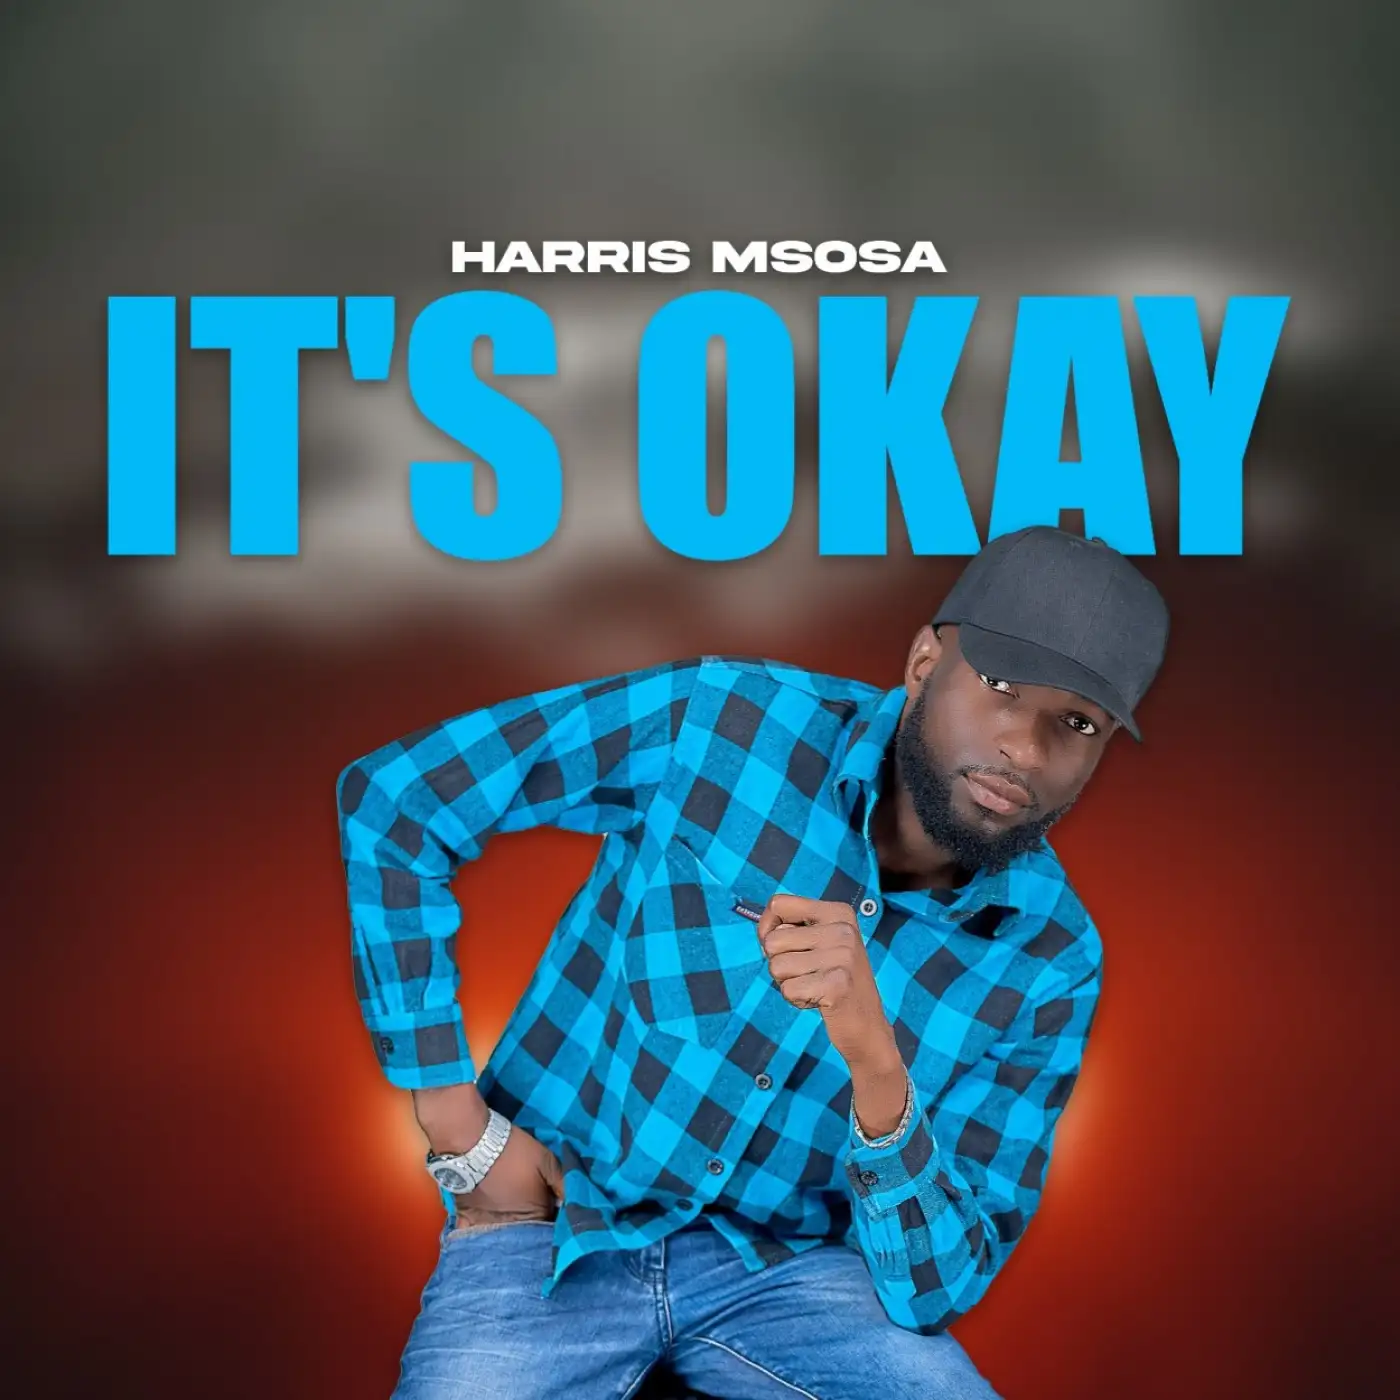 Harris Msosa-Harris Msosa - Its Okay-song artwork cover